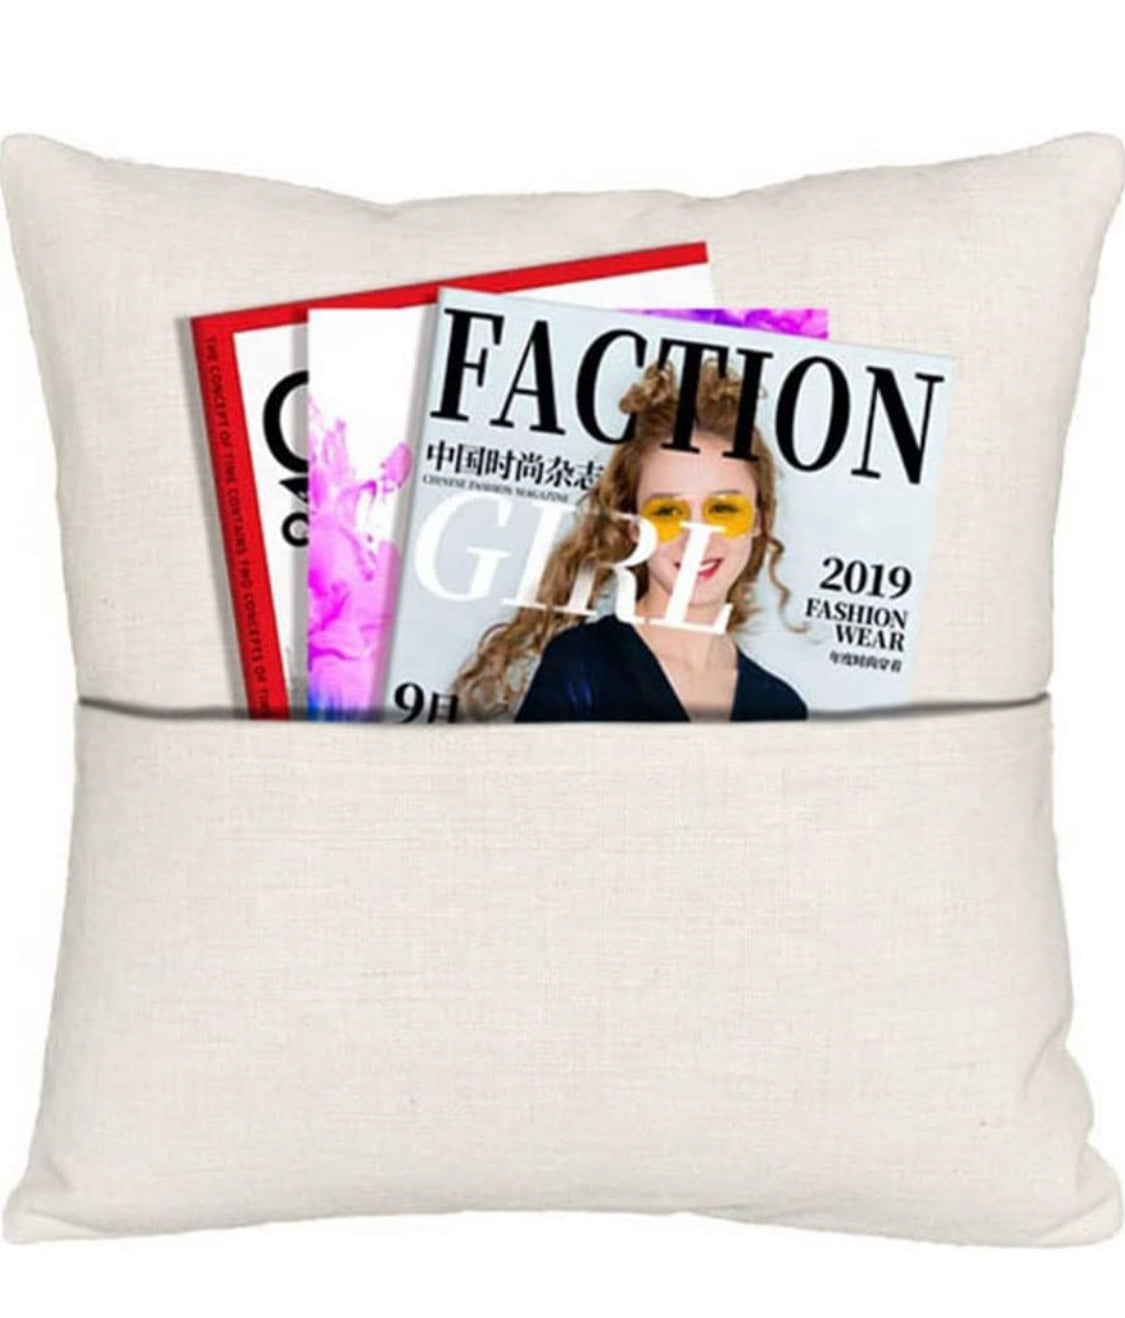 Sublimation Pocket Pillow – BLANKO BLANKS